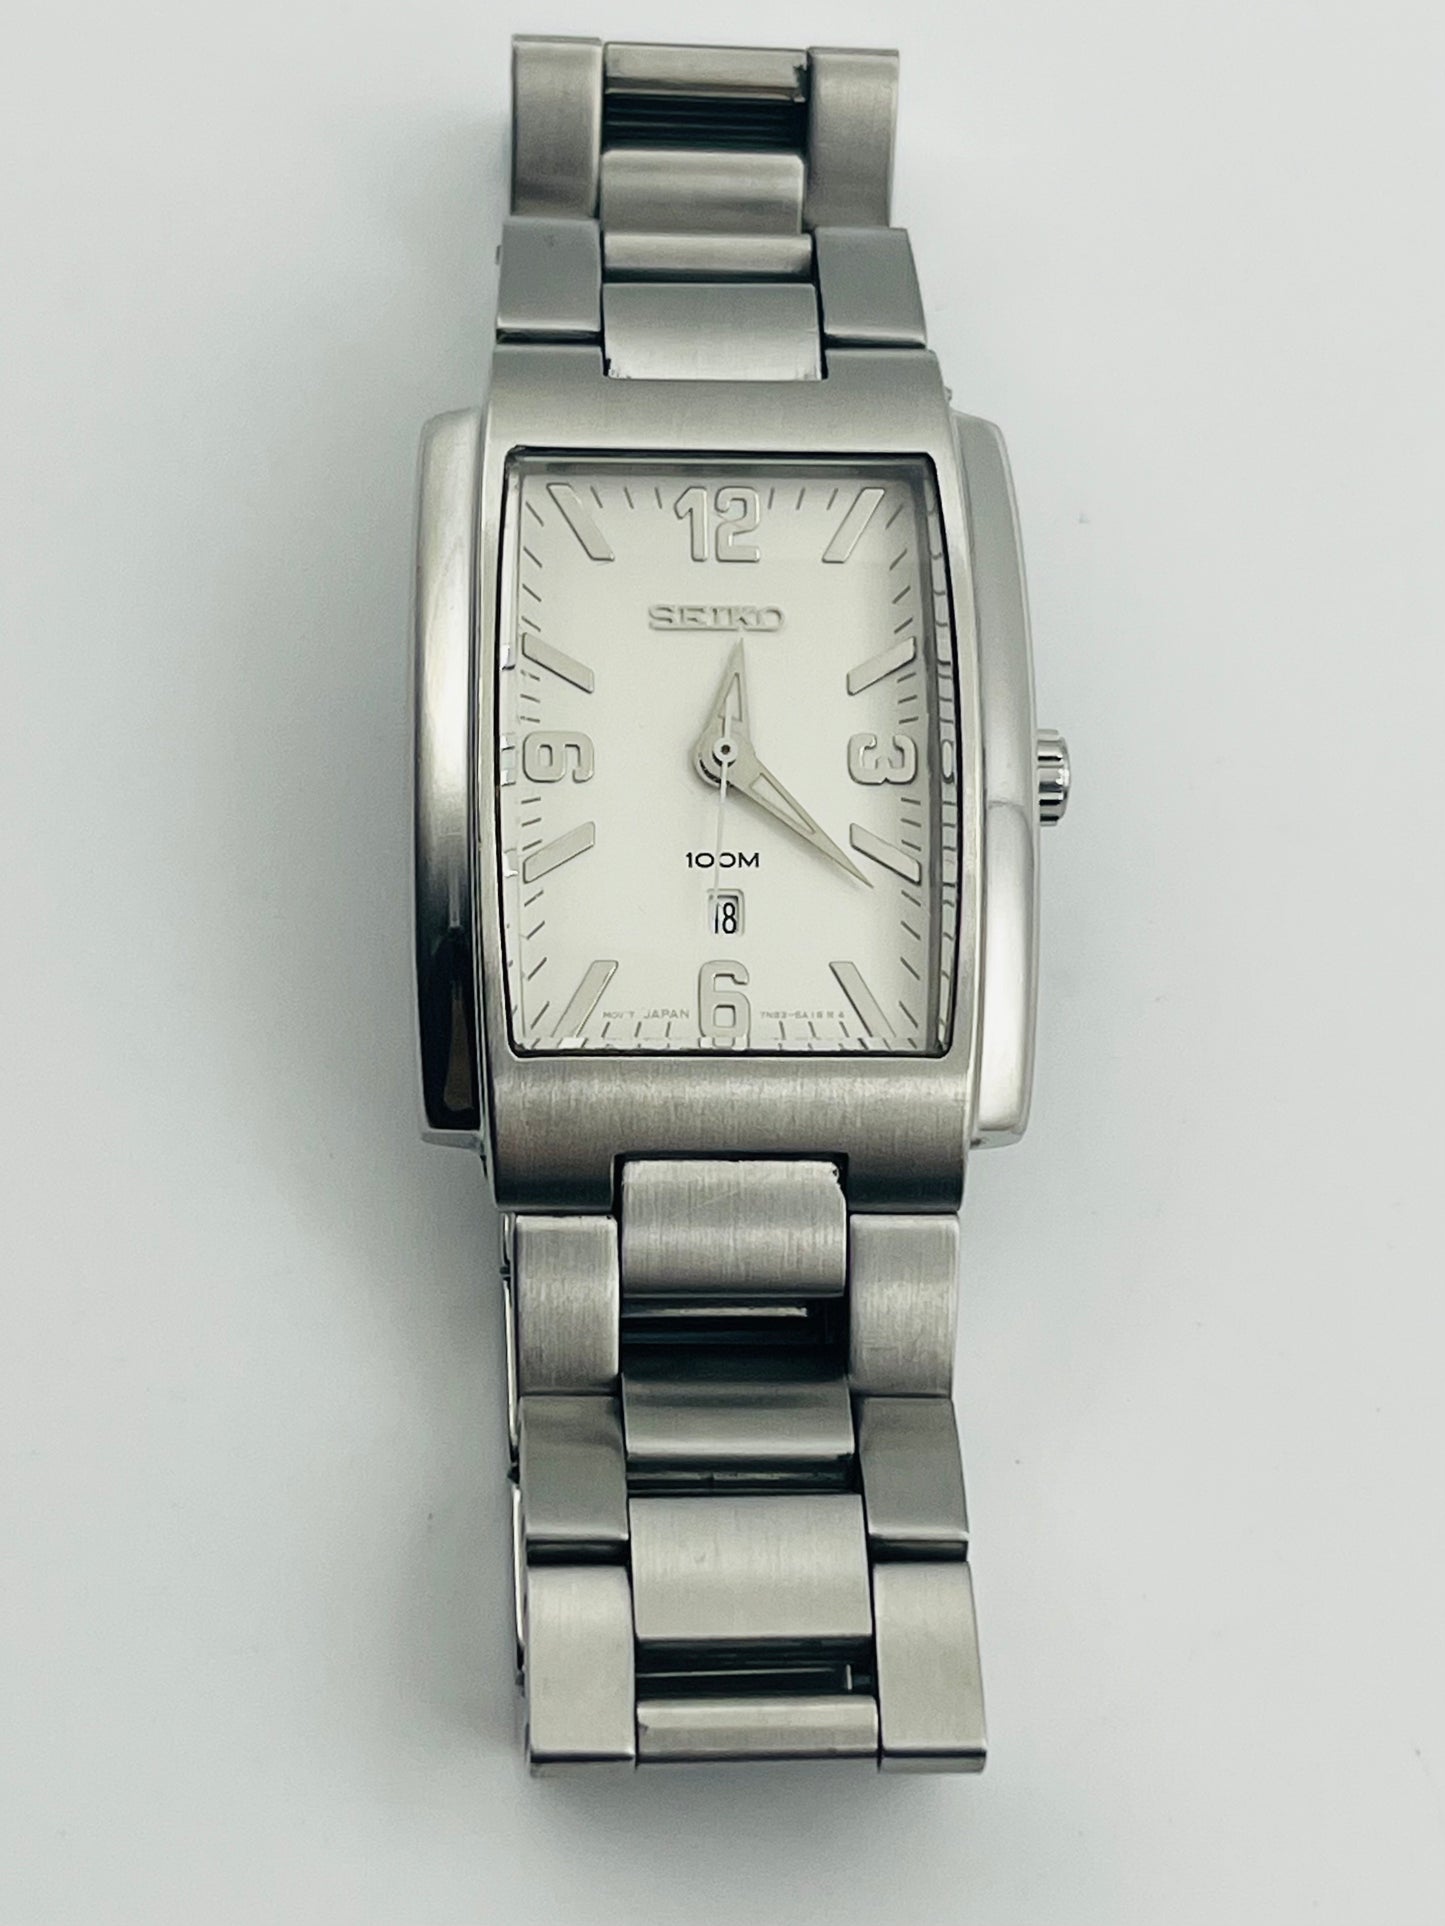 Seiko 1999 silver tone, tank style watch